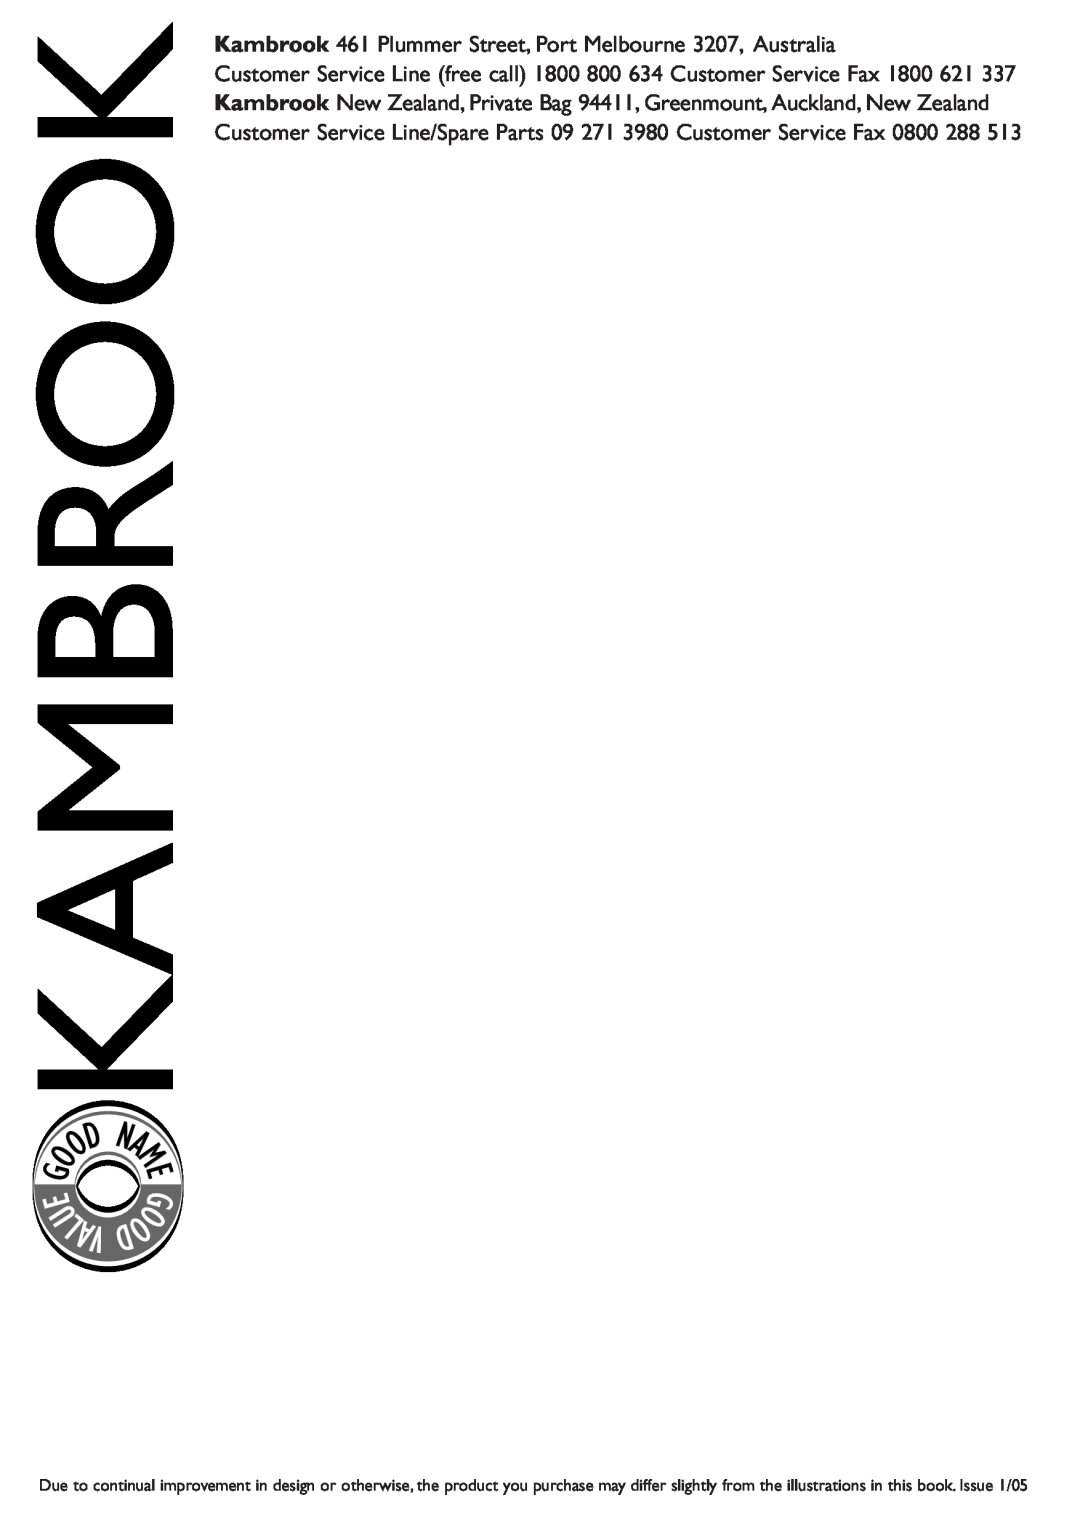 Kambrook KIS20 manual U Lav, Kambrook 461 Plummer Street, Port Melbourne 3207, Australia 